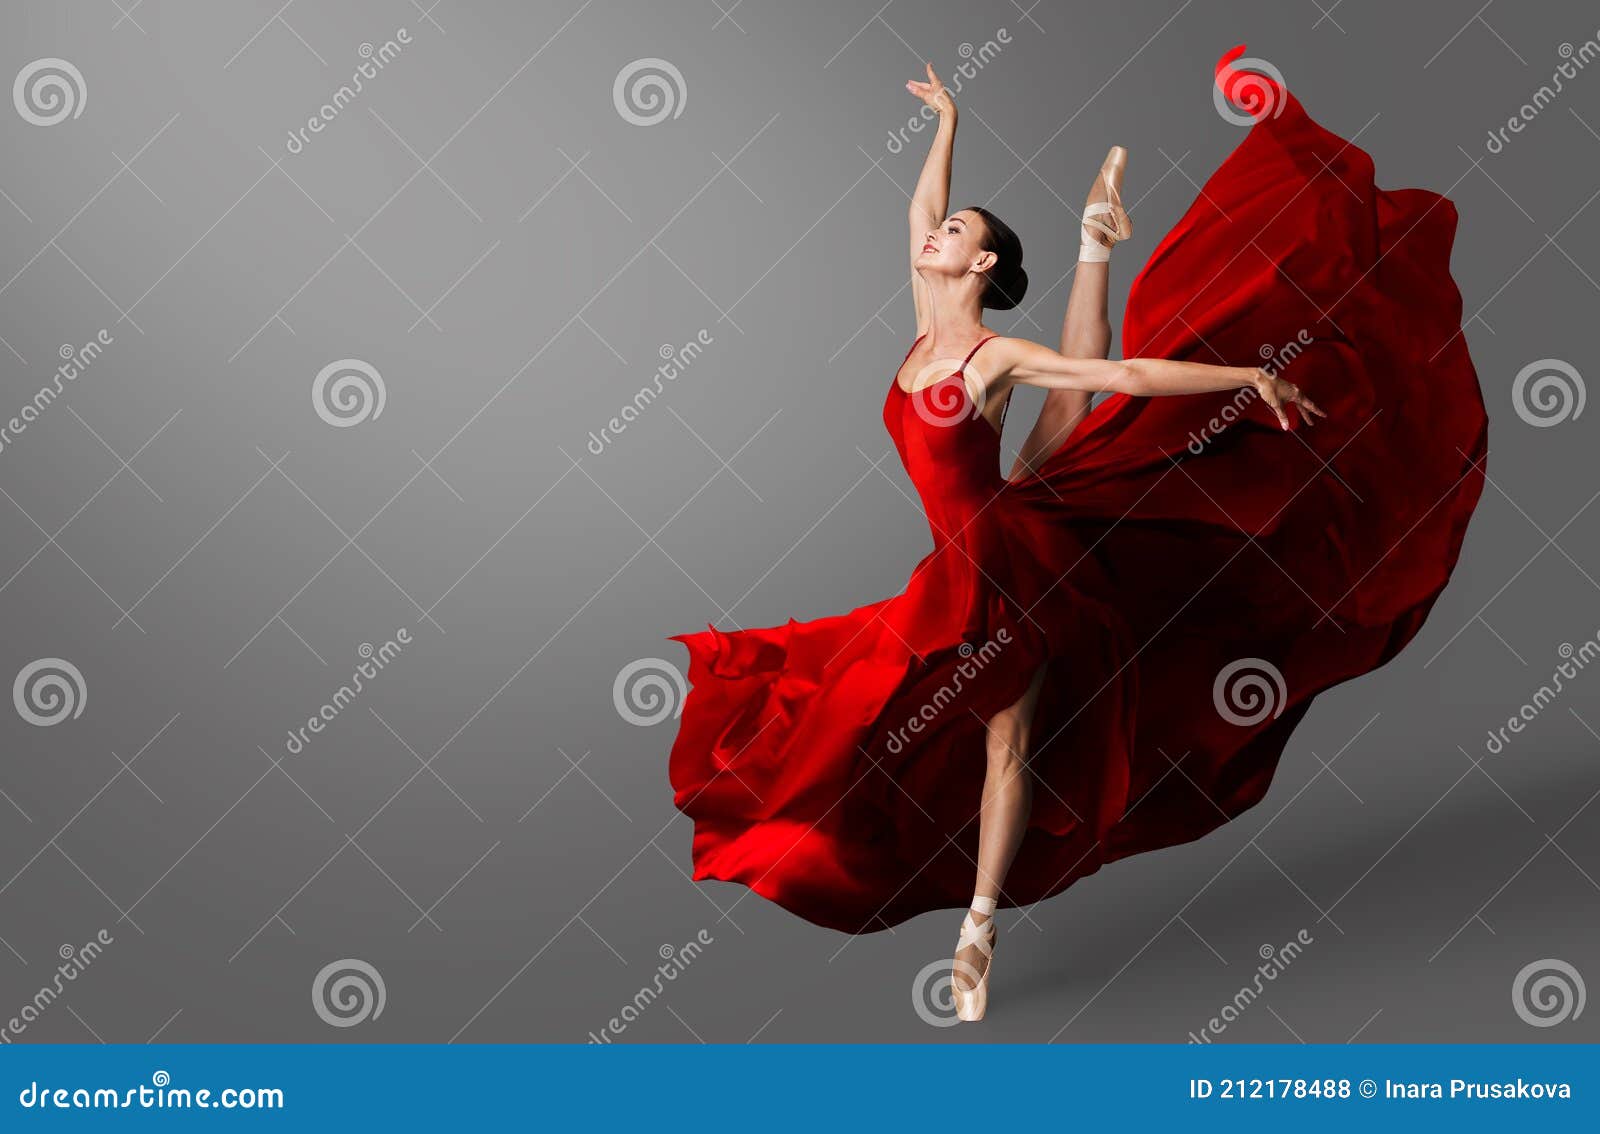 Baile Bailarina. Bailarina De Ballet Con Vestido Rojo Saltando Escupitajo.  Mujer En Zapatos De Bailarina Bailando En Vestido De Se Foto de archivo -  Imagen de hembra, gasa: 212178488